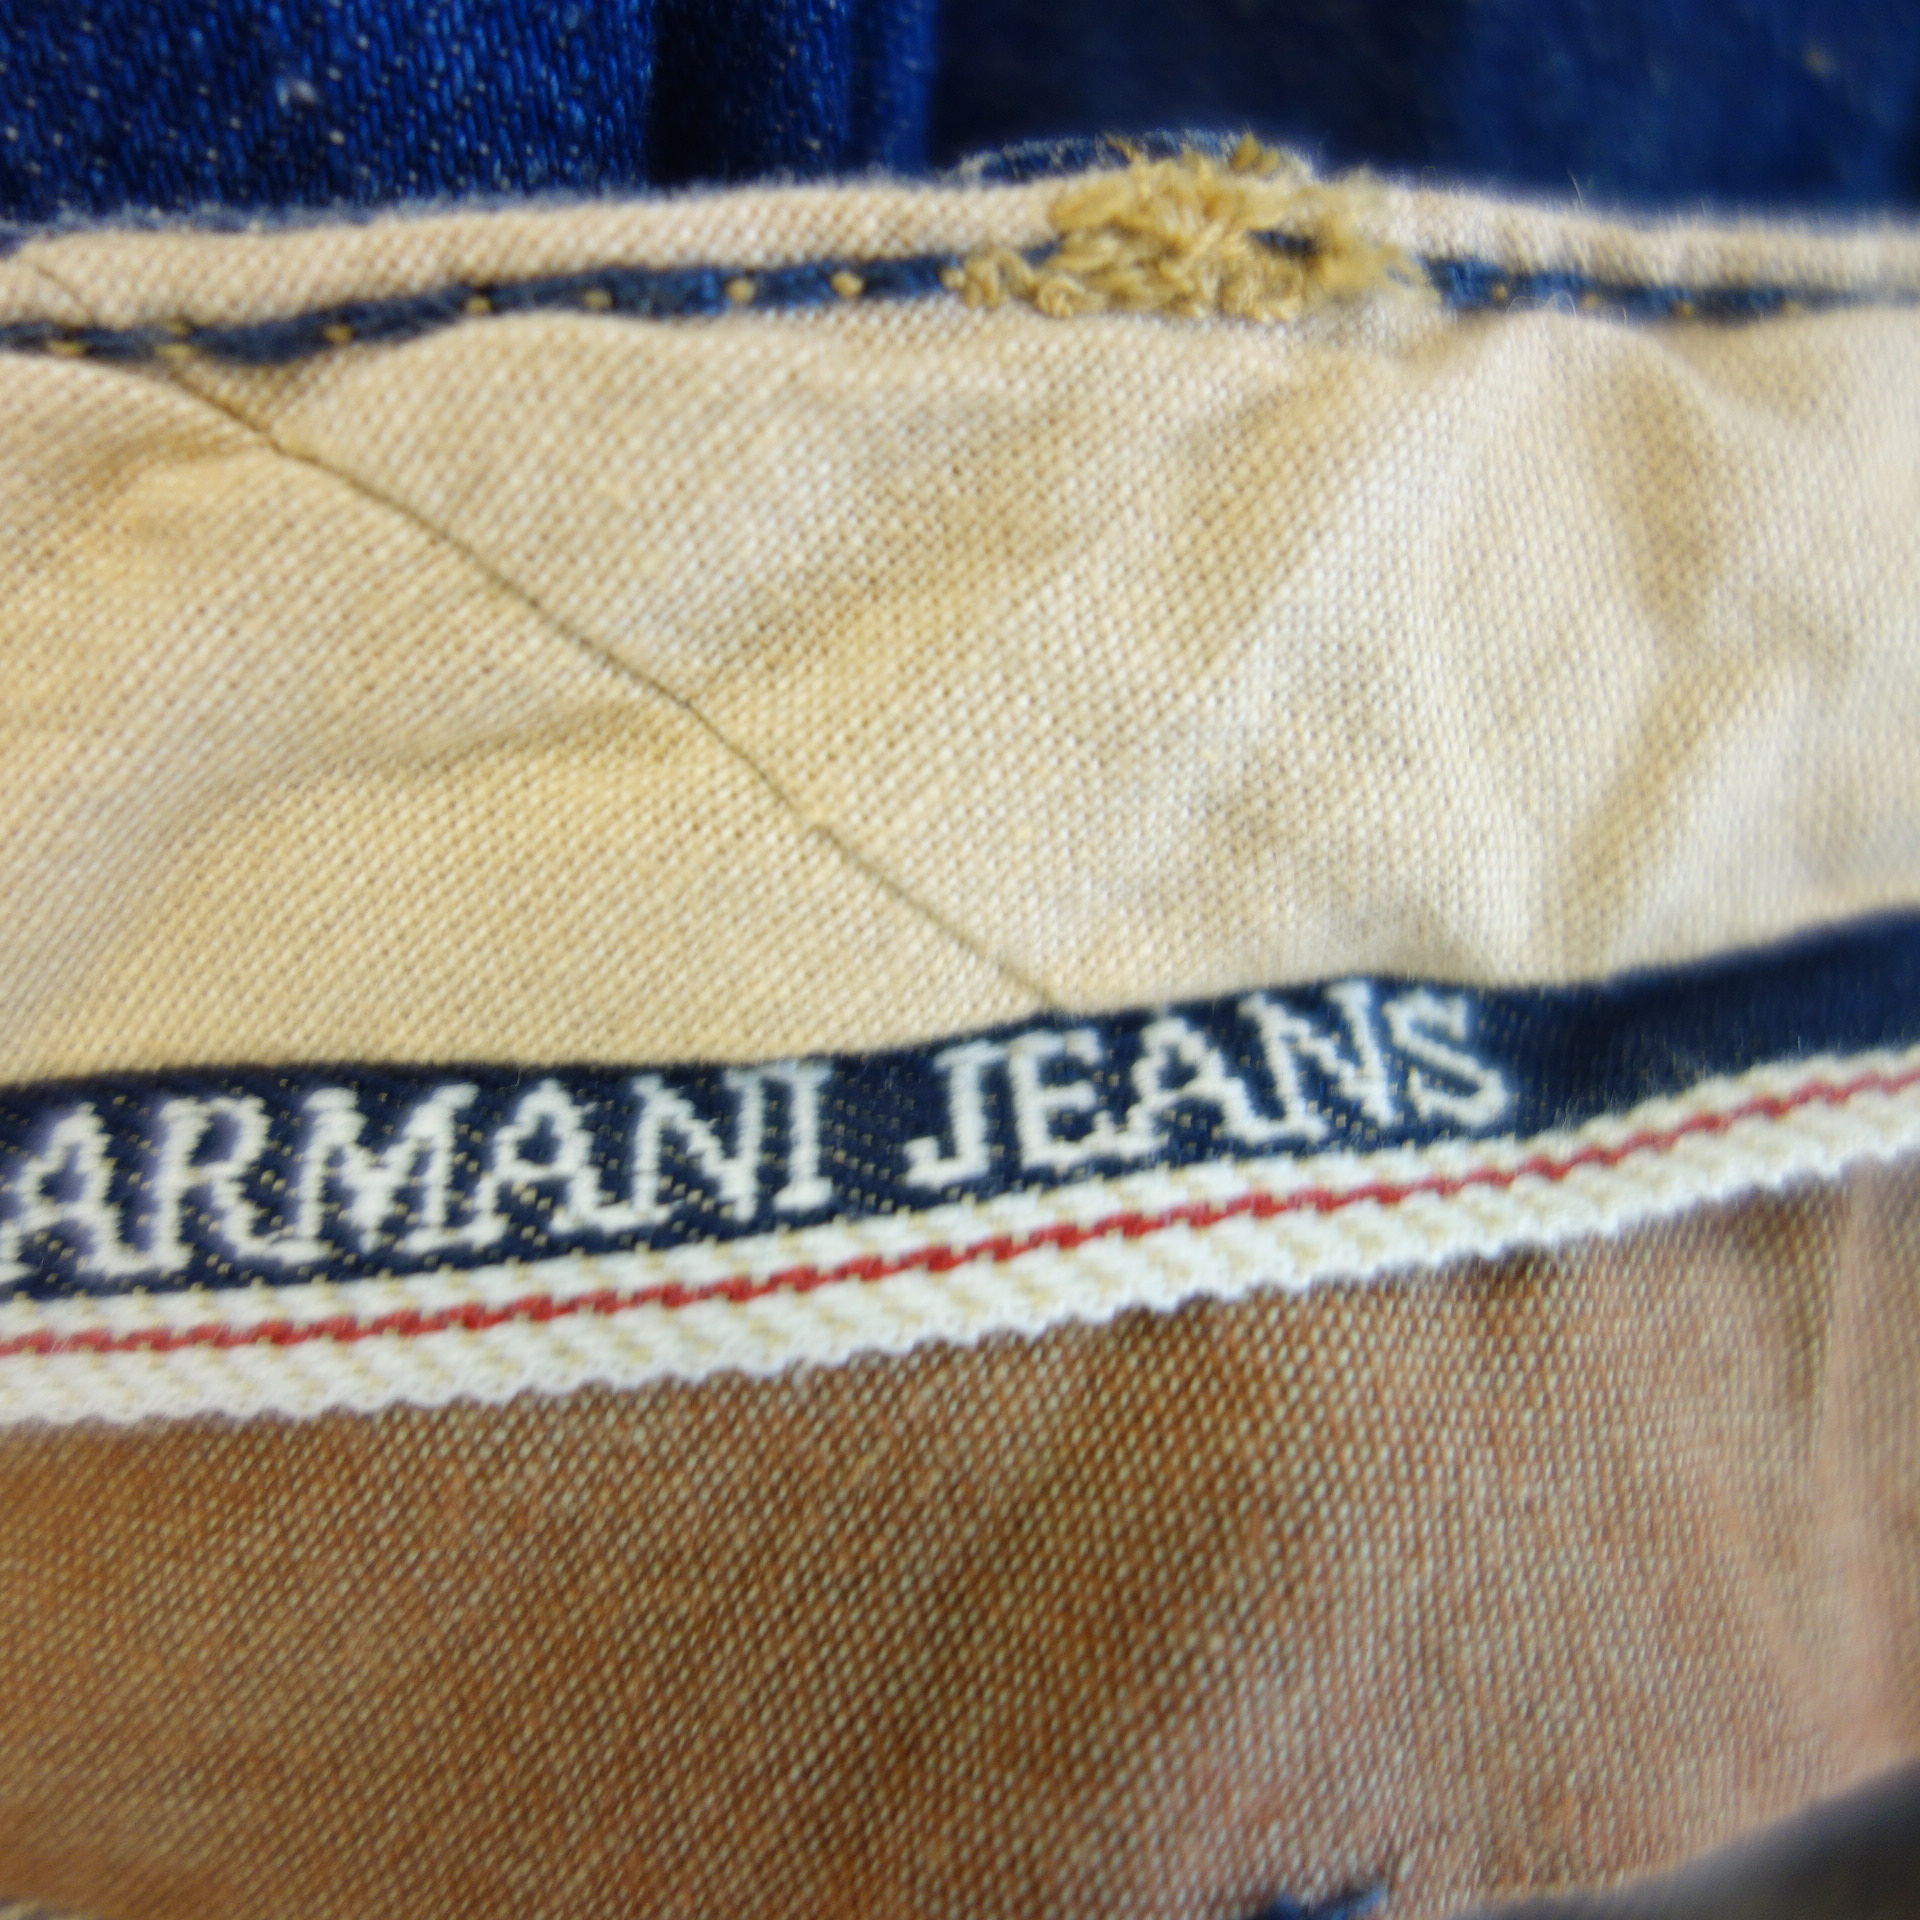 ARMANI JEANS Herren Jeans Hose Jeanshose J28 Blau Slim Fit Low Waist Tight Leg